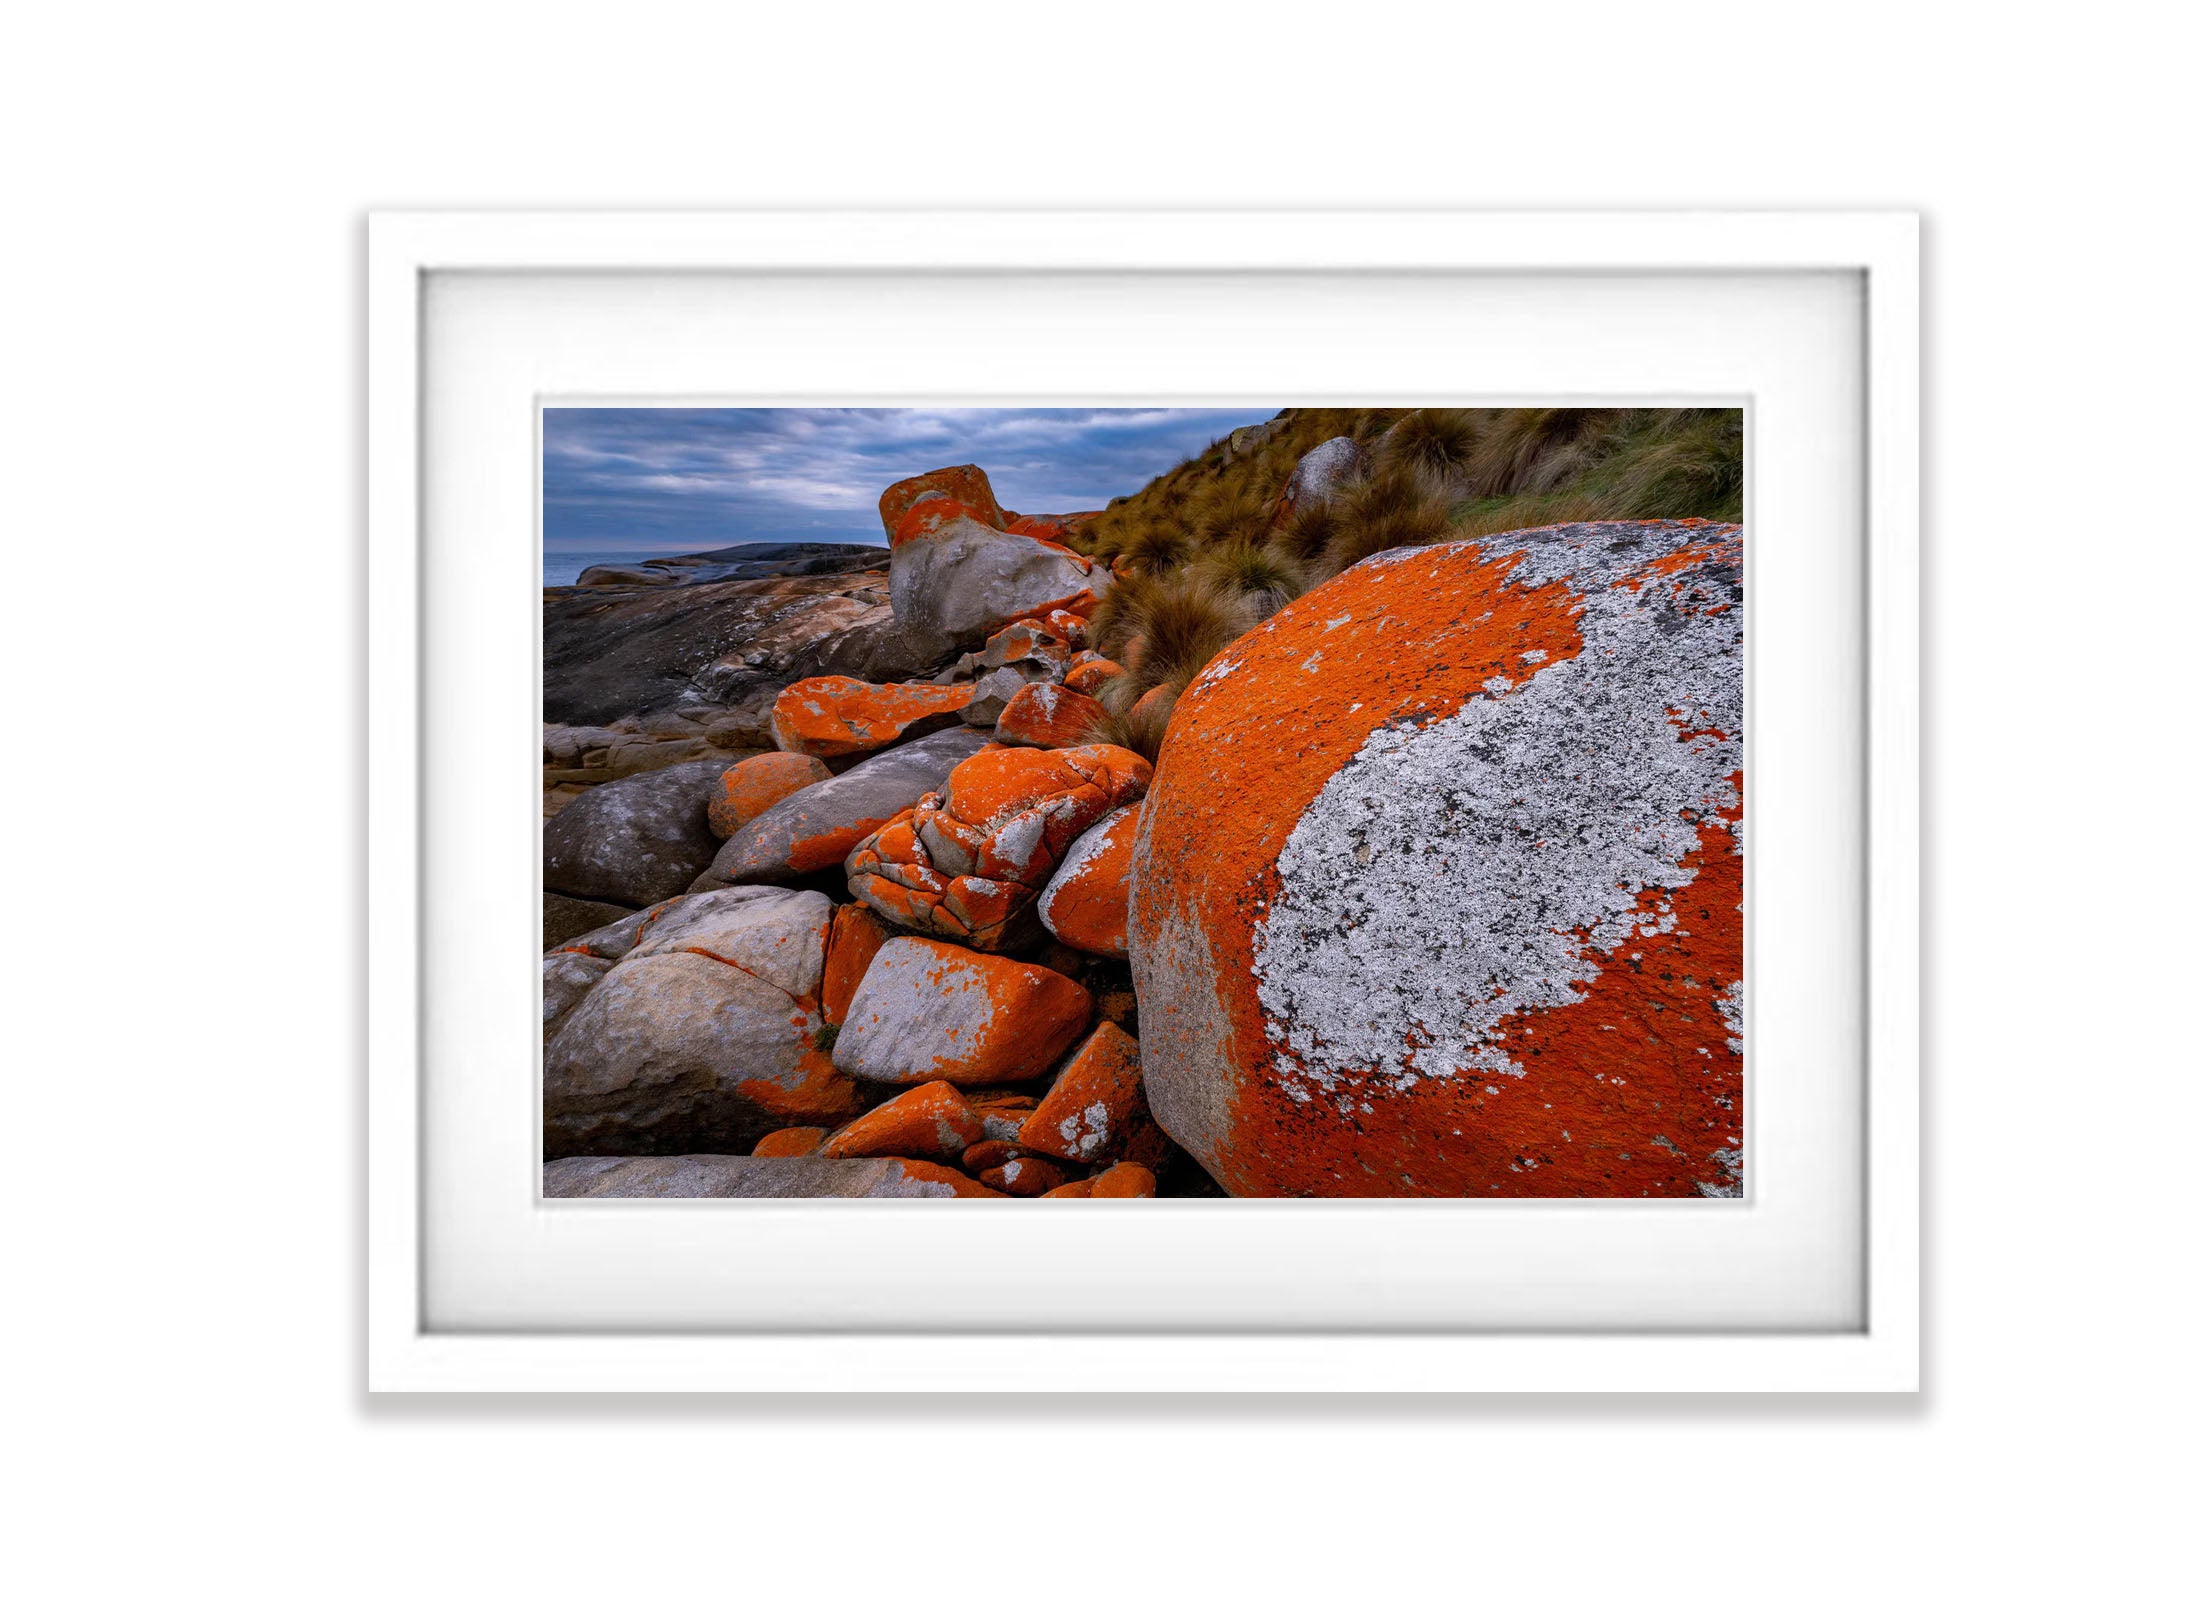 Red Lichen Rocks #2, Flinders Island, Tasmania